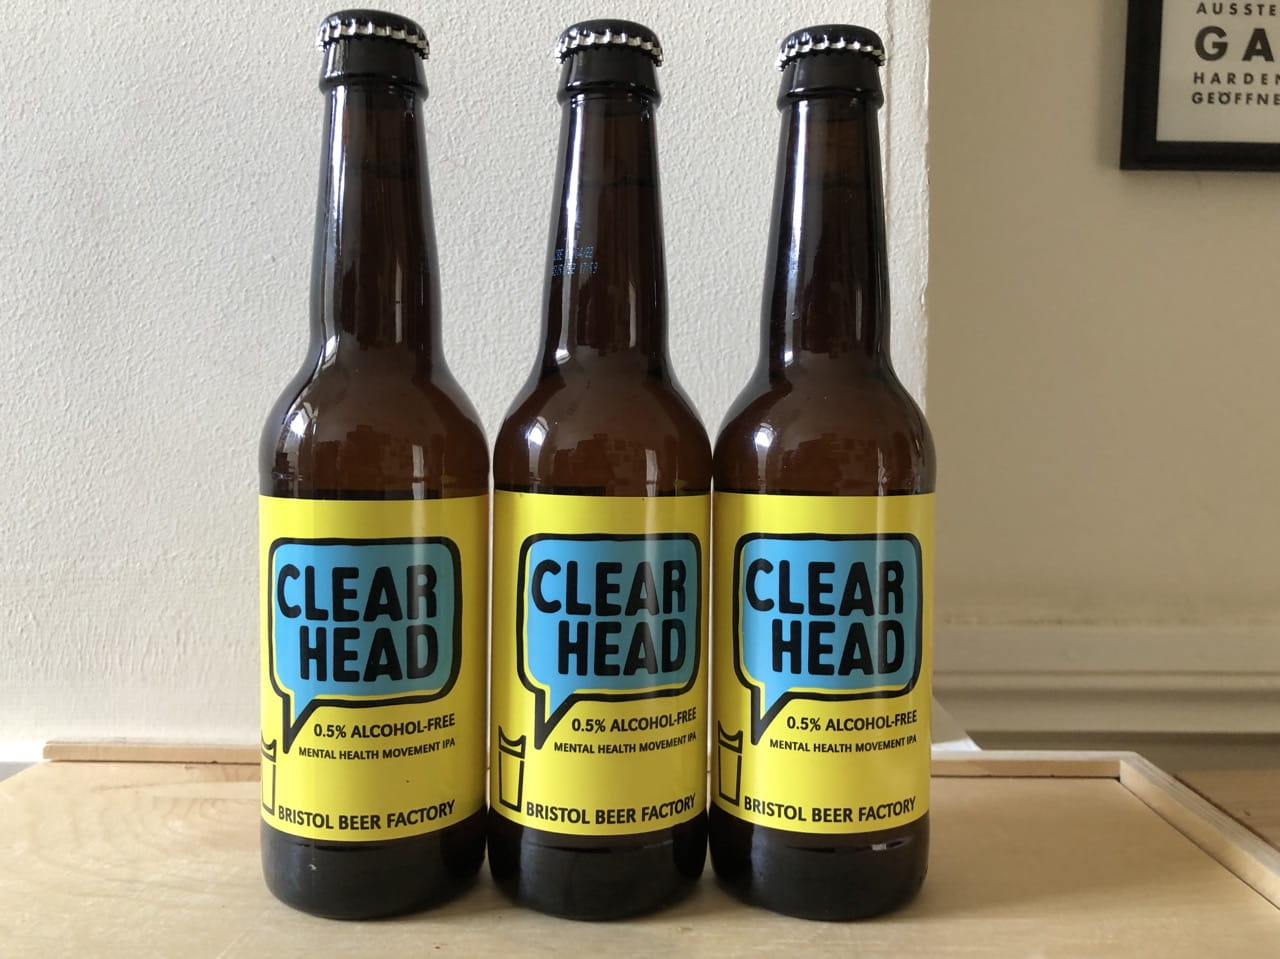  Clear Head Alcohol-free IPA